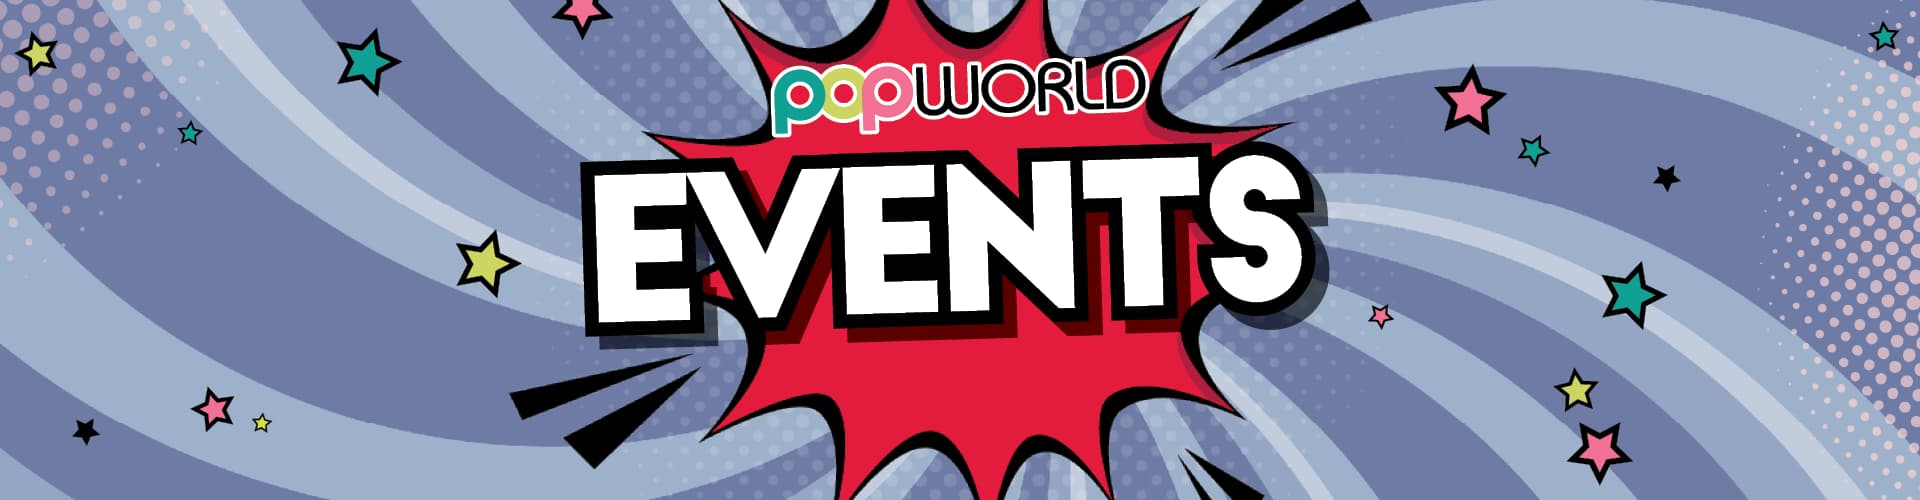 Events at Popworld York